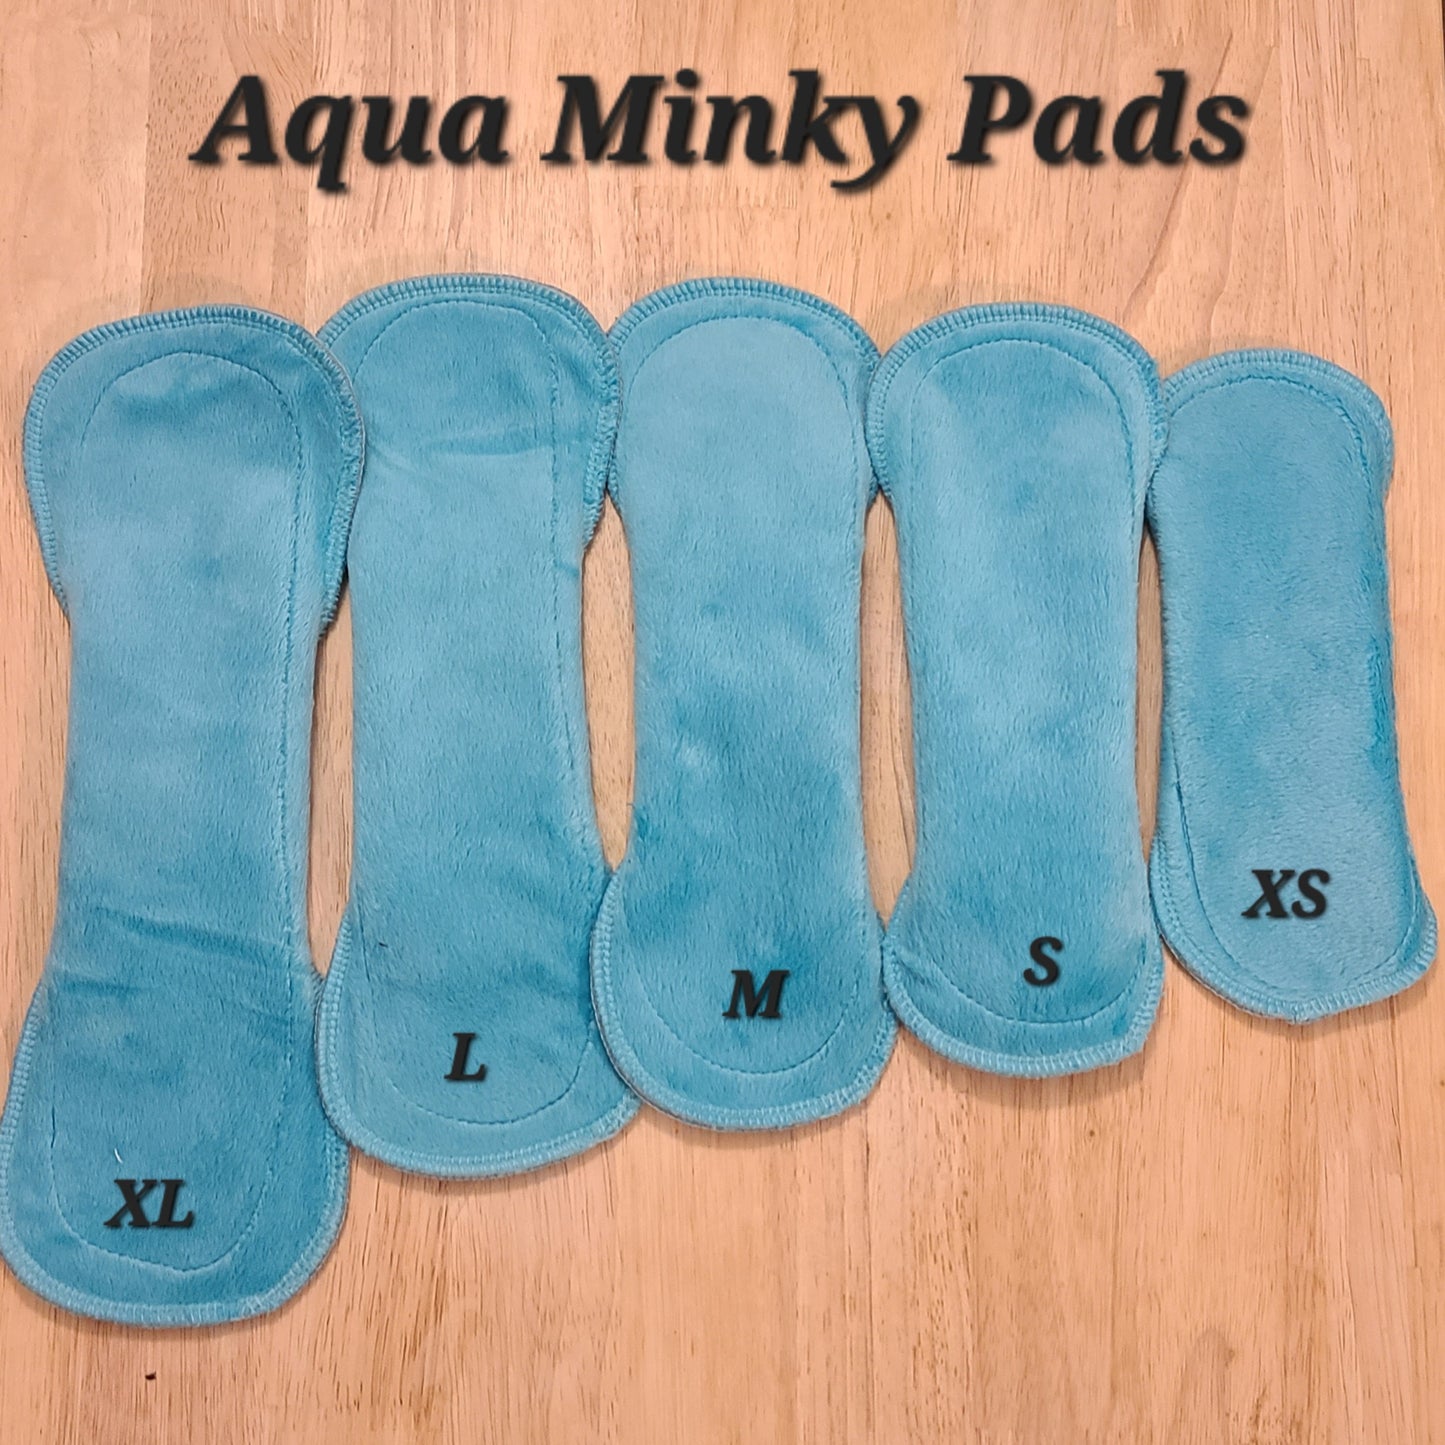 Aqua Minky Pad